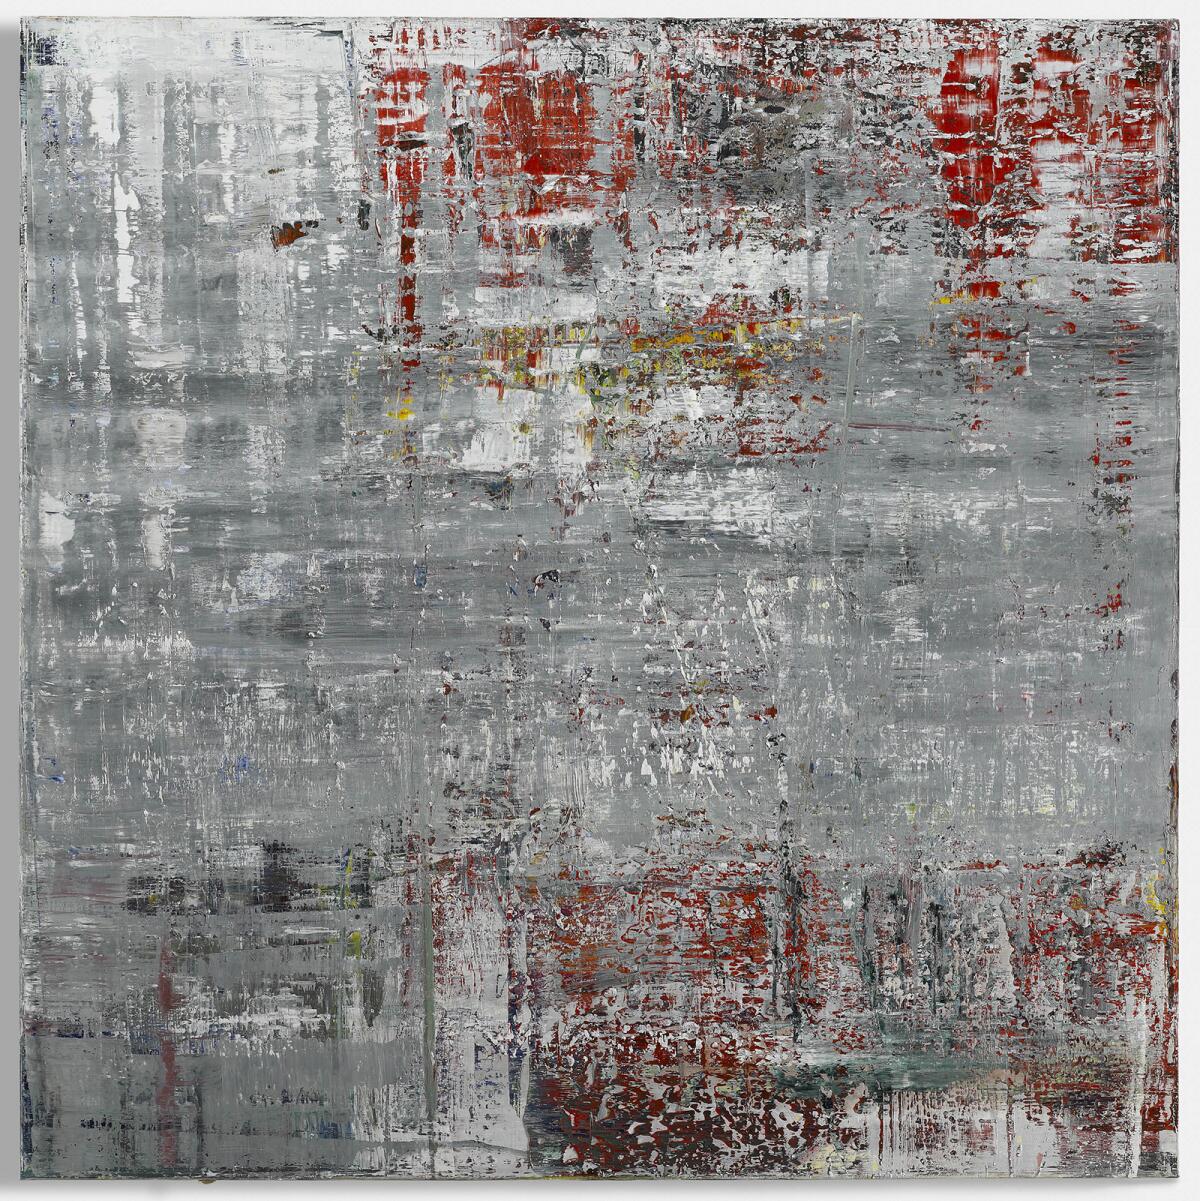 Gerhard Richter, "Cage 4," 2006, oil on canvas